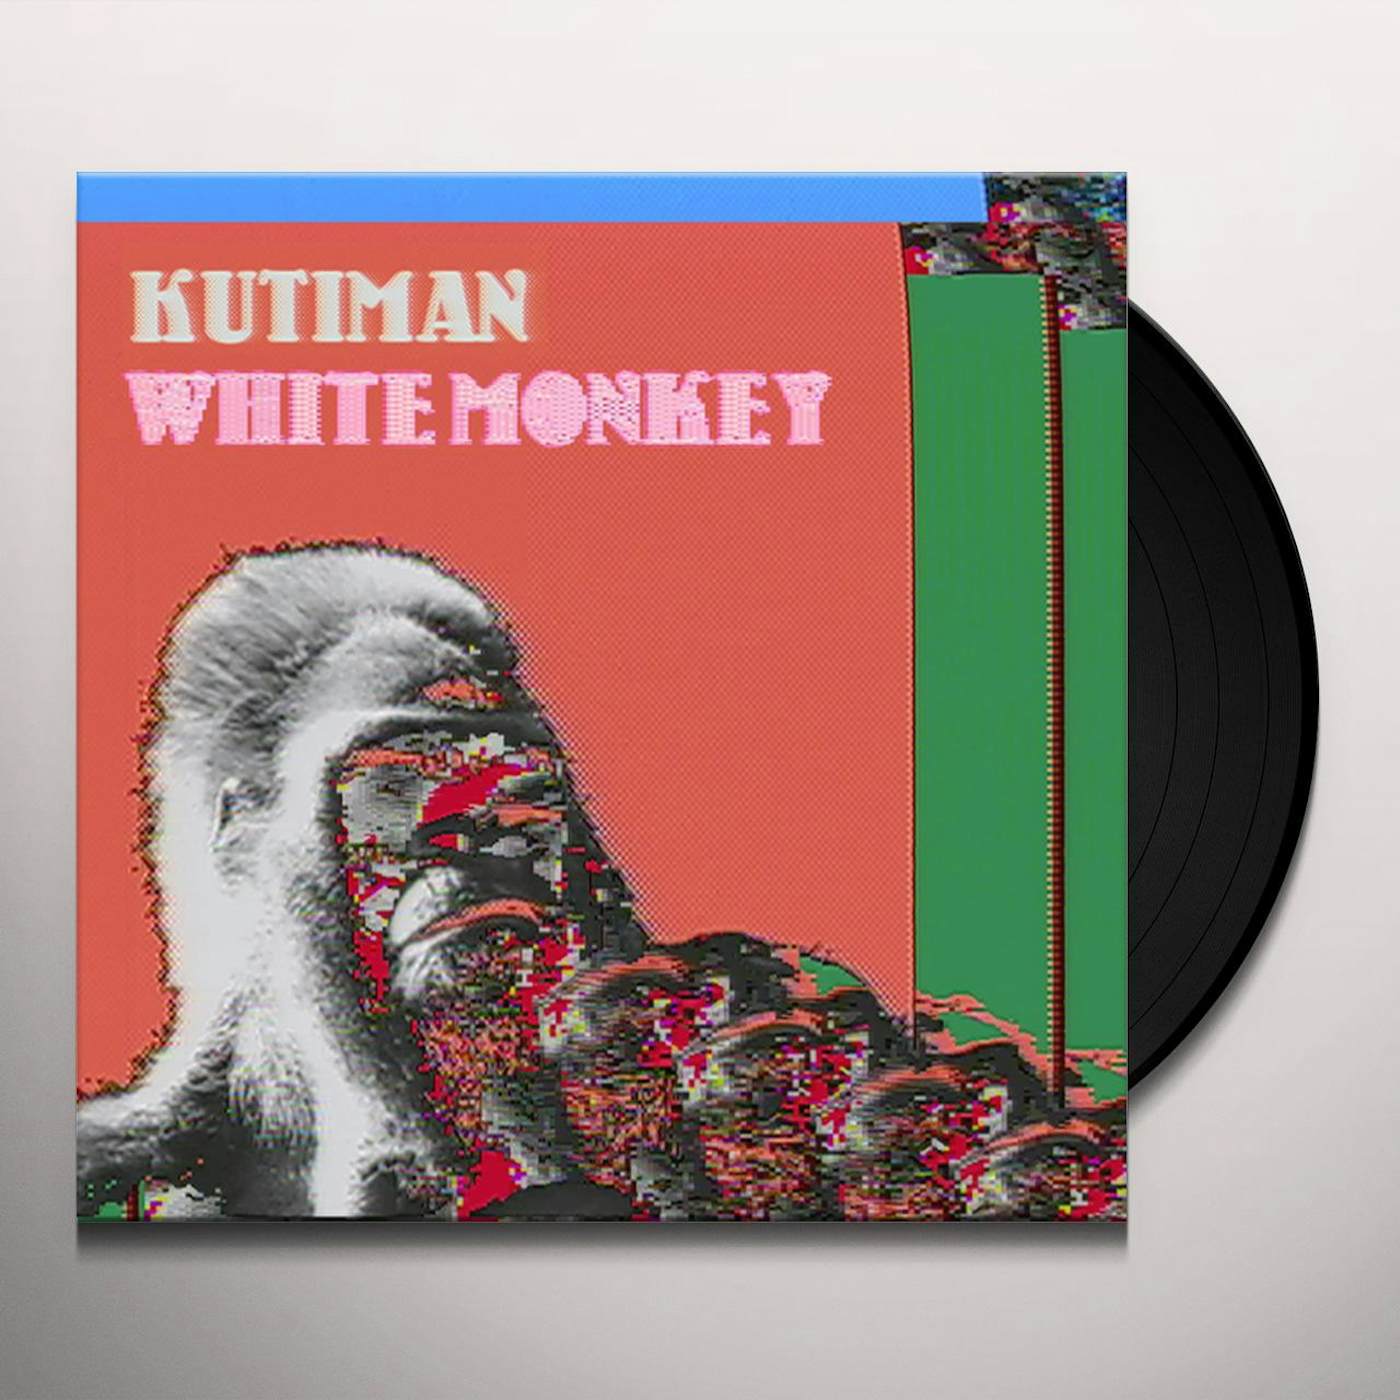 Kutiman White Monkey Vinyl Record